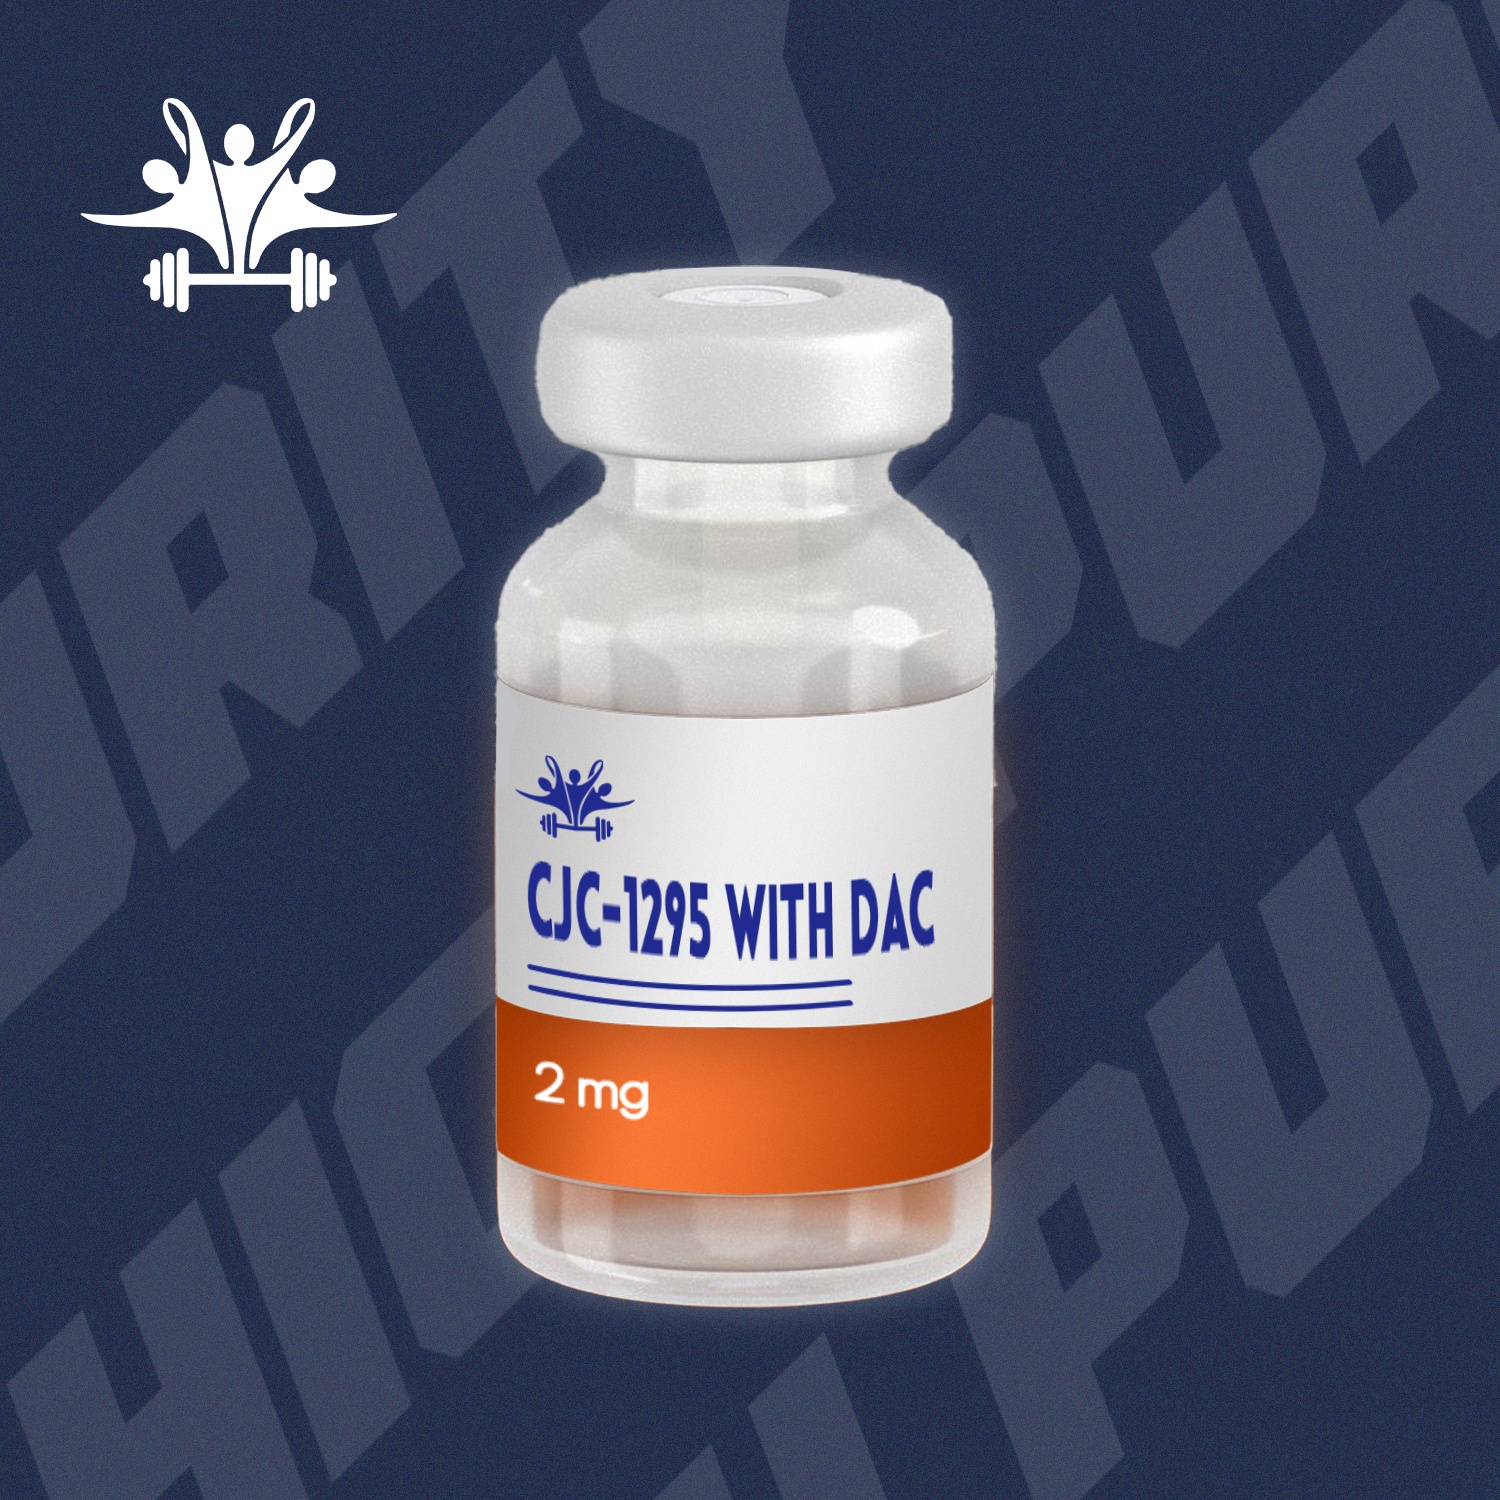 CJC1295 with/without dac peptide powder